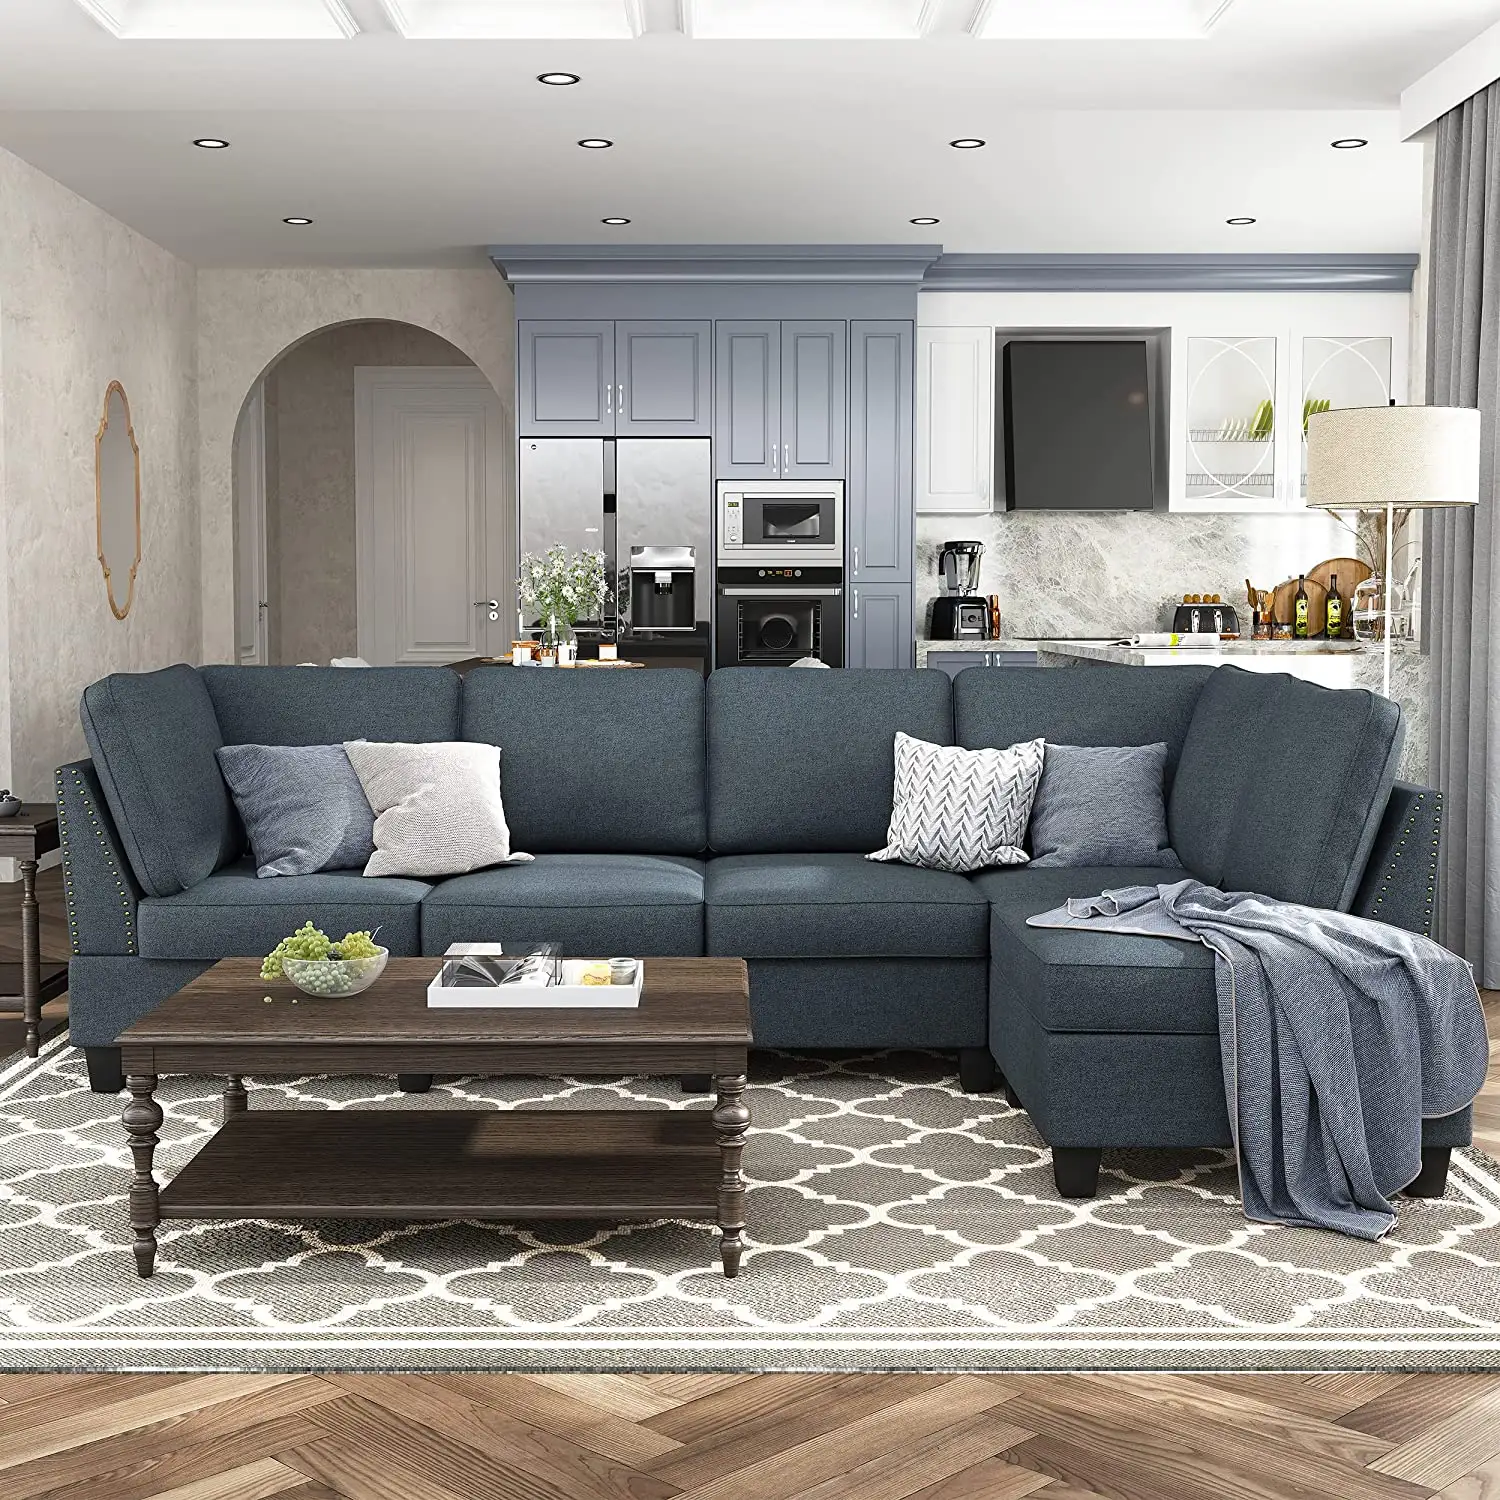 Nordic Modern Living Room Sofa Hersteller L-förmige Schnitts ofa Luxus Ecke Modular Sofa Schnitts ofa Set Möbel